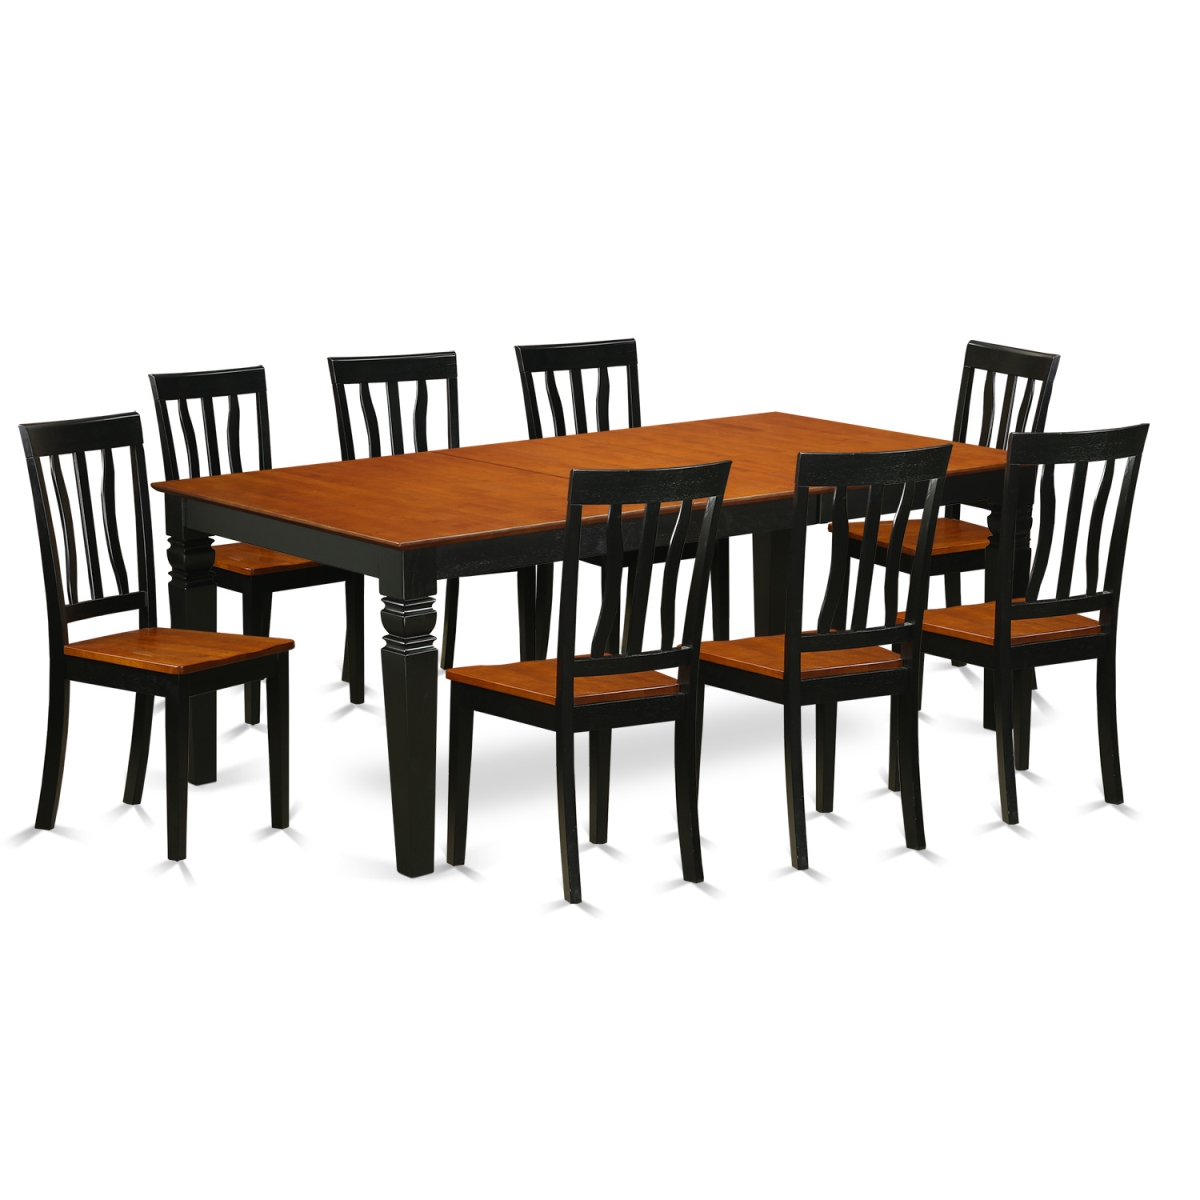 Lgan9-bch-w Kitchen Dinette Set With One Logan Table & 8 Chairs, Black & Cherry - 9 Piece